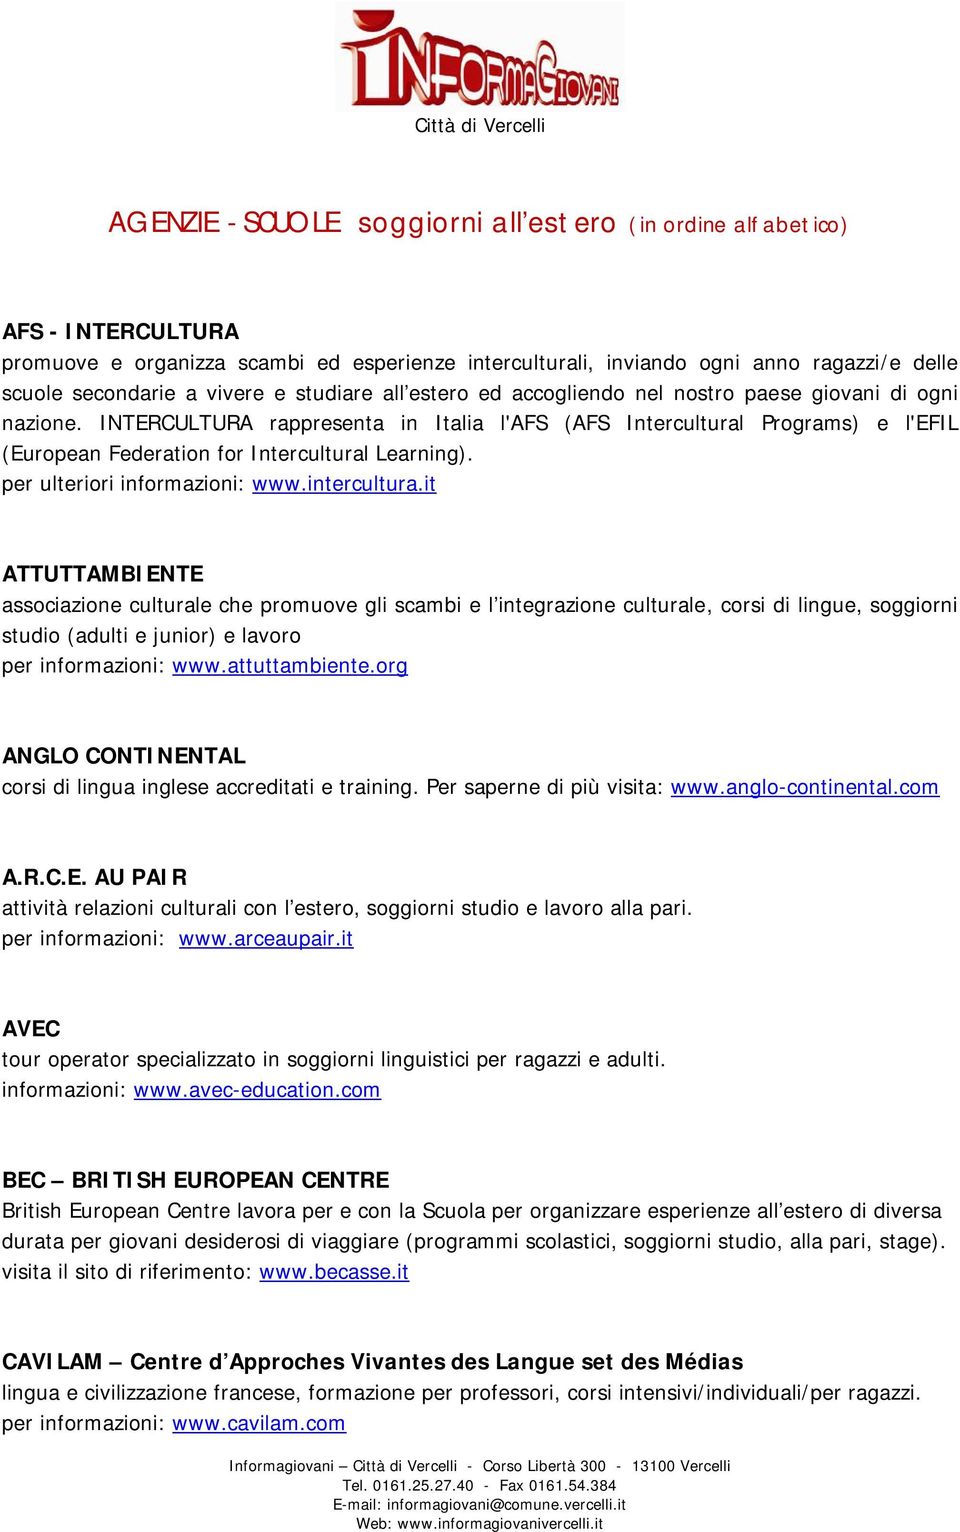 INTERCULTURA rappresenta in Italia l'afs (AFS Intercultural Programs) e l'efil (European Federation for Intercultural Learning). per ulteriori informazioni: www.intercultura.